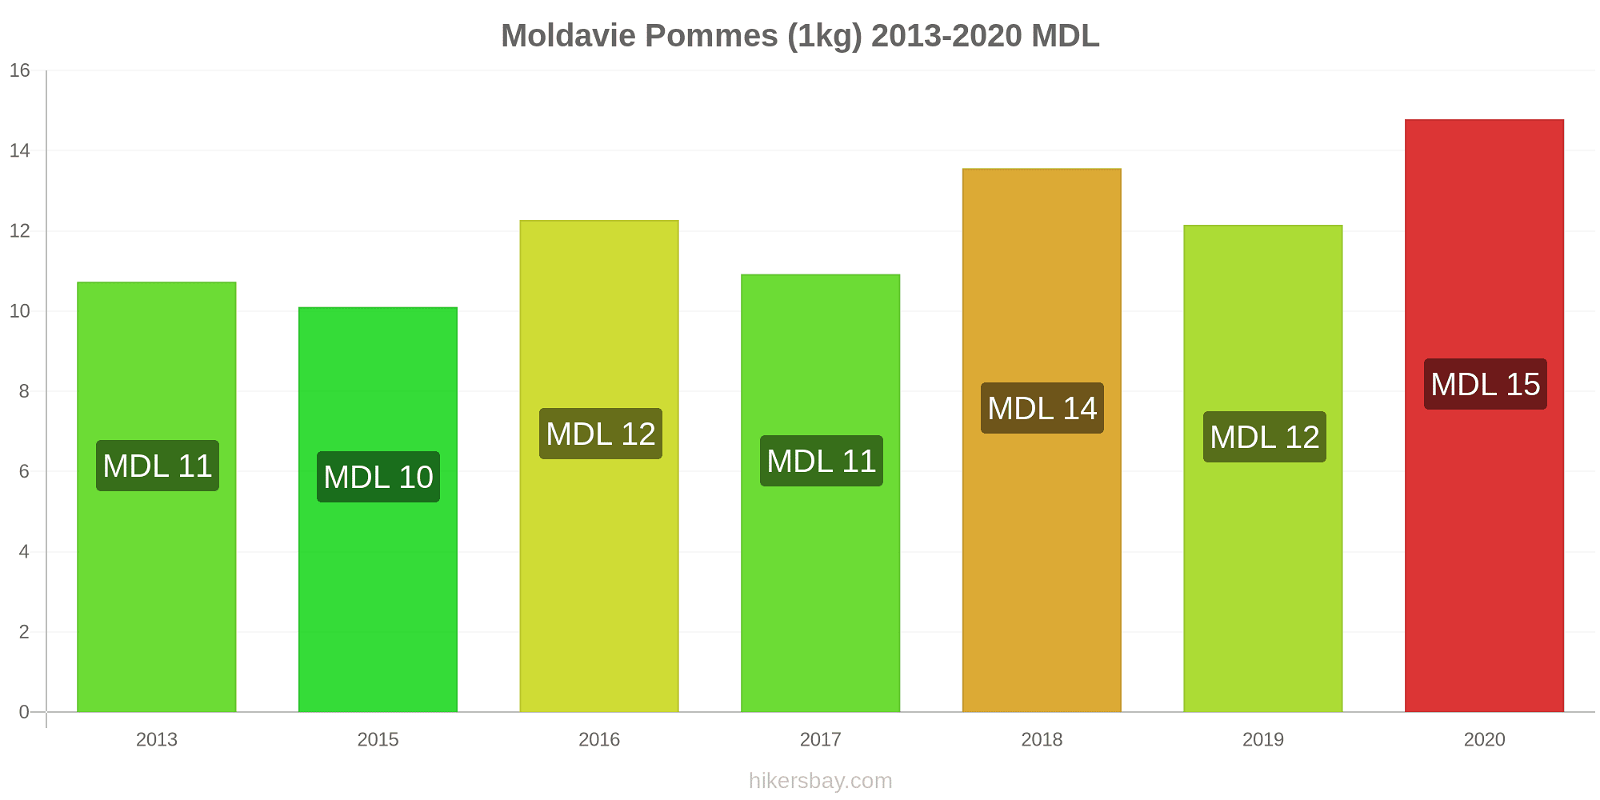 Moldavie changements de prix Pommes (1kg) hikersbay.com